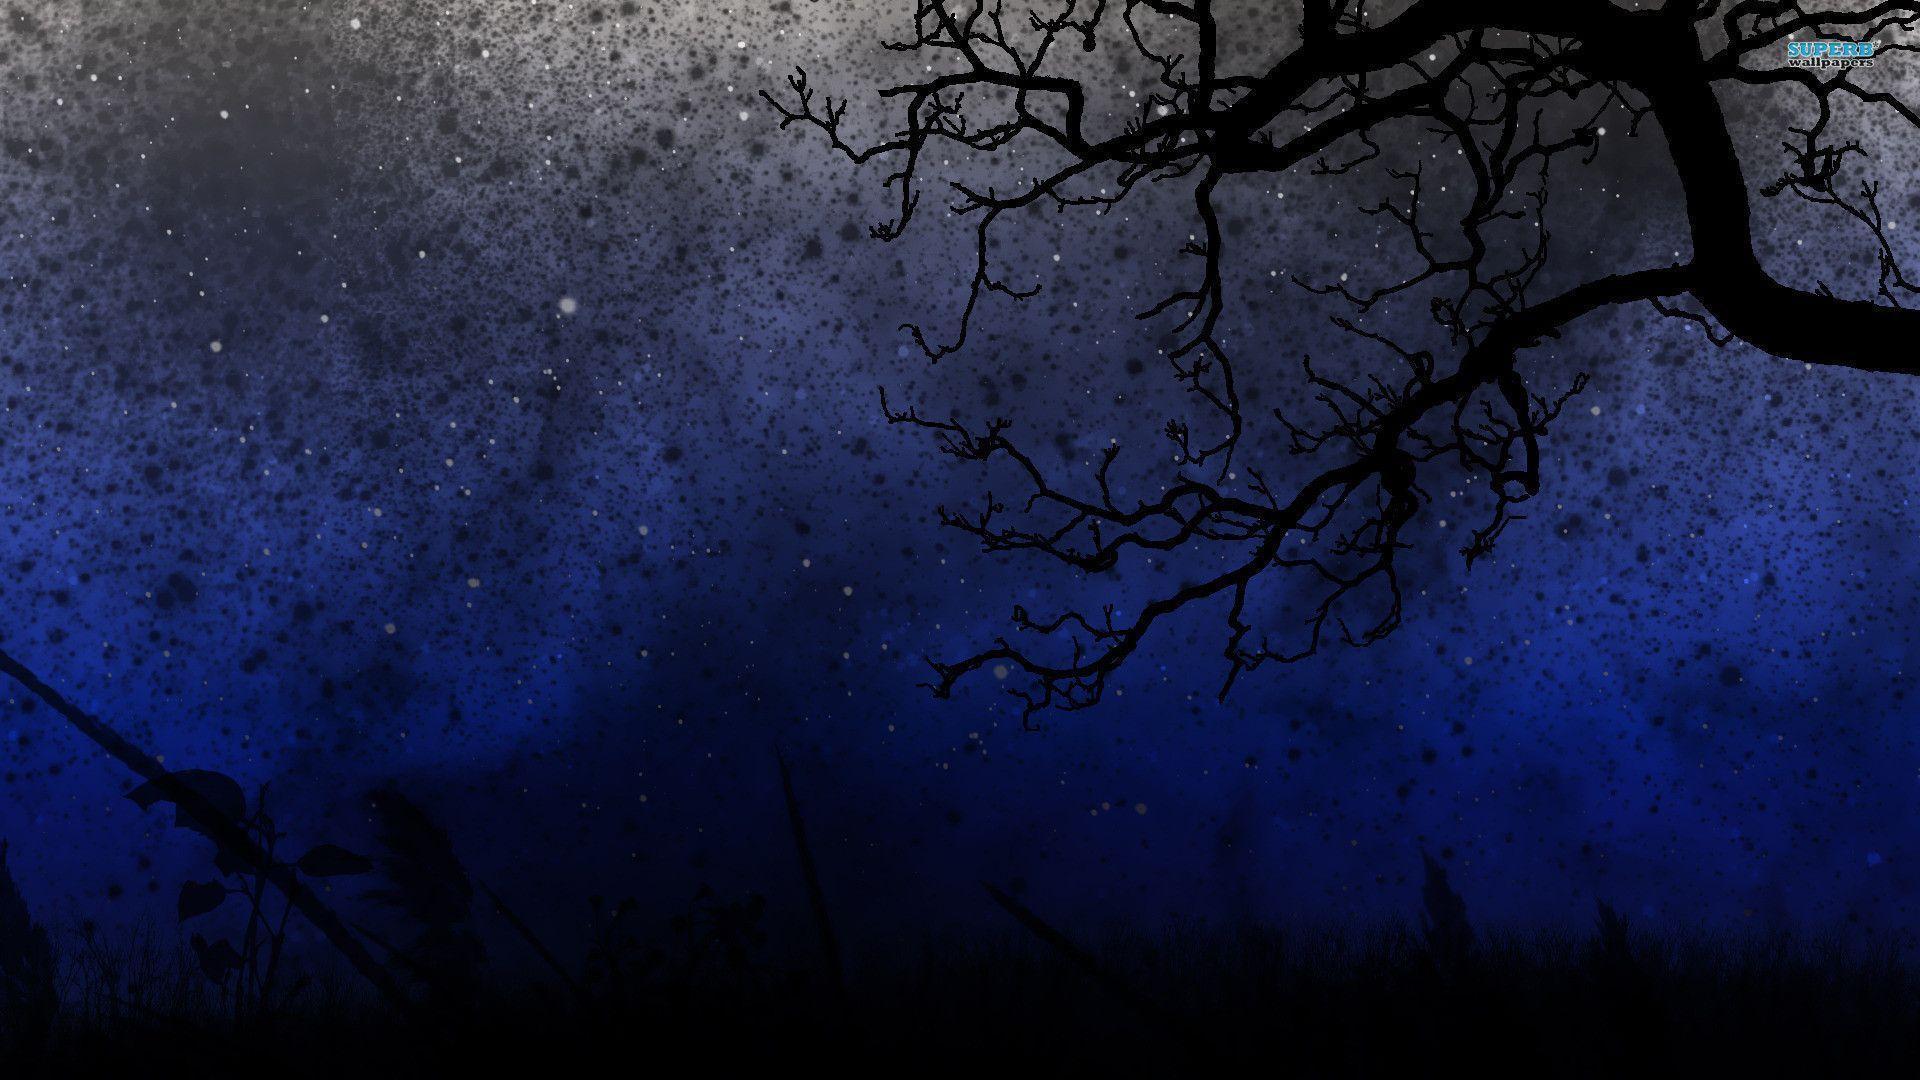 starry night desktop background Wallpaper HD Image 4861